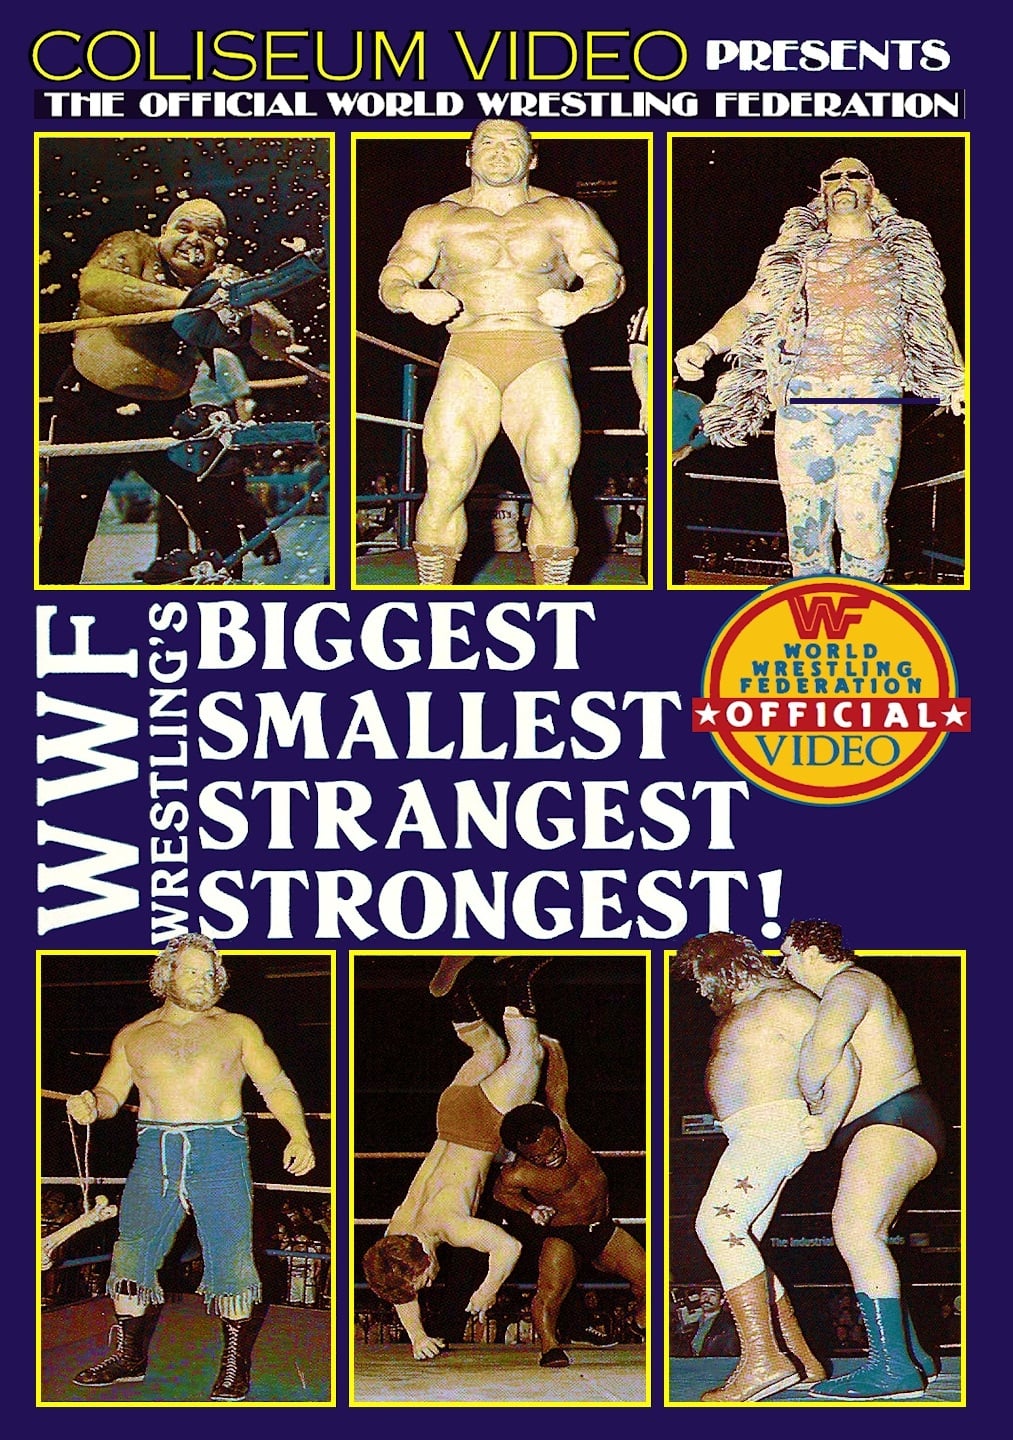 WWF's Biggest, Smallest, Strangest, Strongest